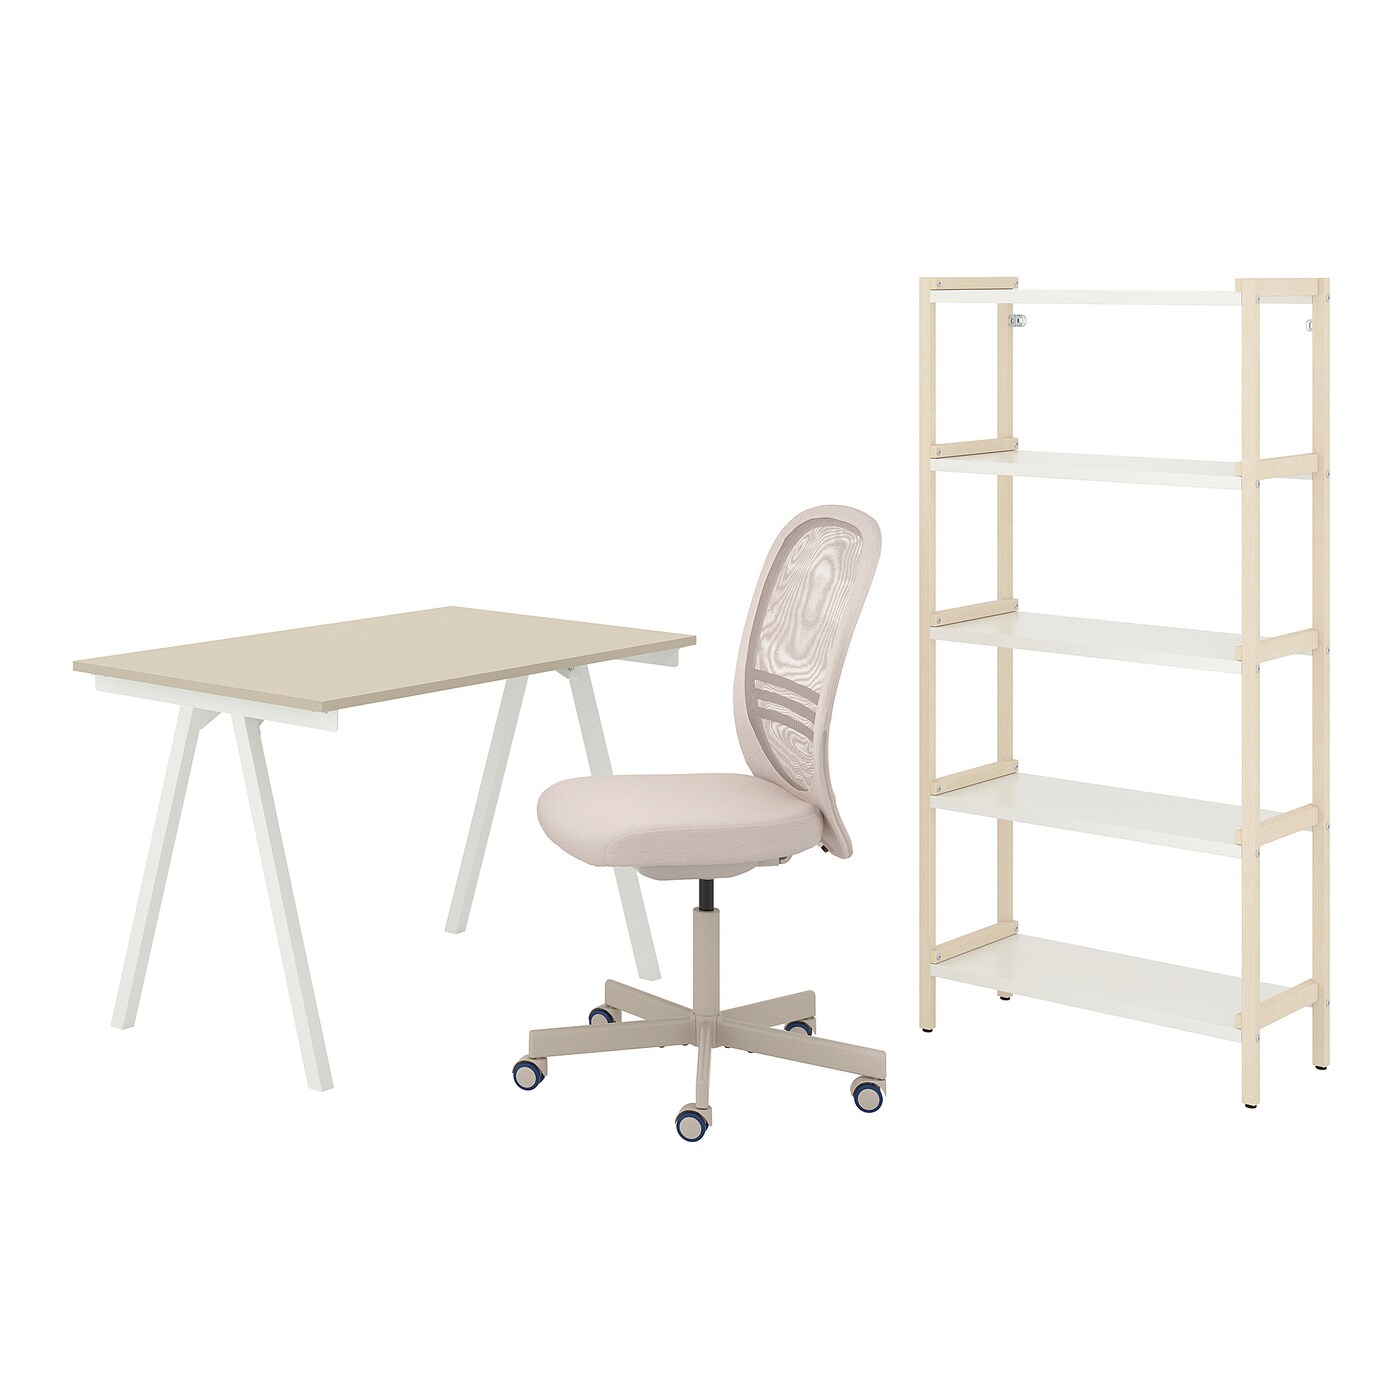 Комбинация: письменный стол, стеллаж и стул - IKEA TROTTEN/FLINTAN/EKENABBEN 120х70 см, 69.5х34.5х154 см, бежевый/белый/под беленый дуб, ТРОТТЕН/ФЛИНТАН/ЭКЕНАББЕН ИКЕА